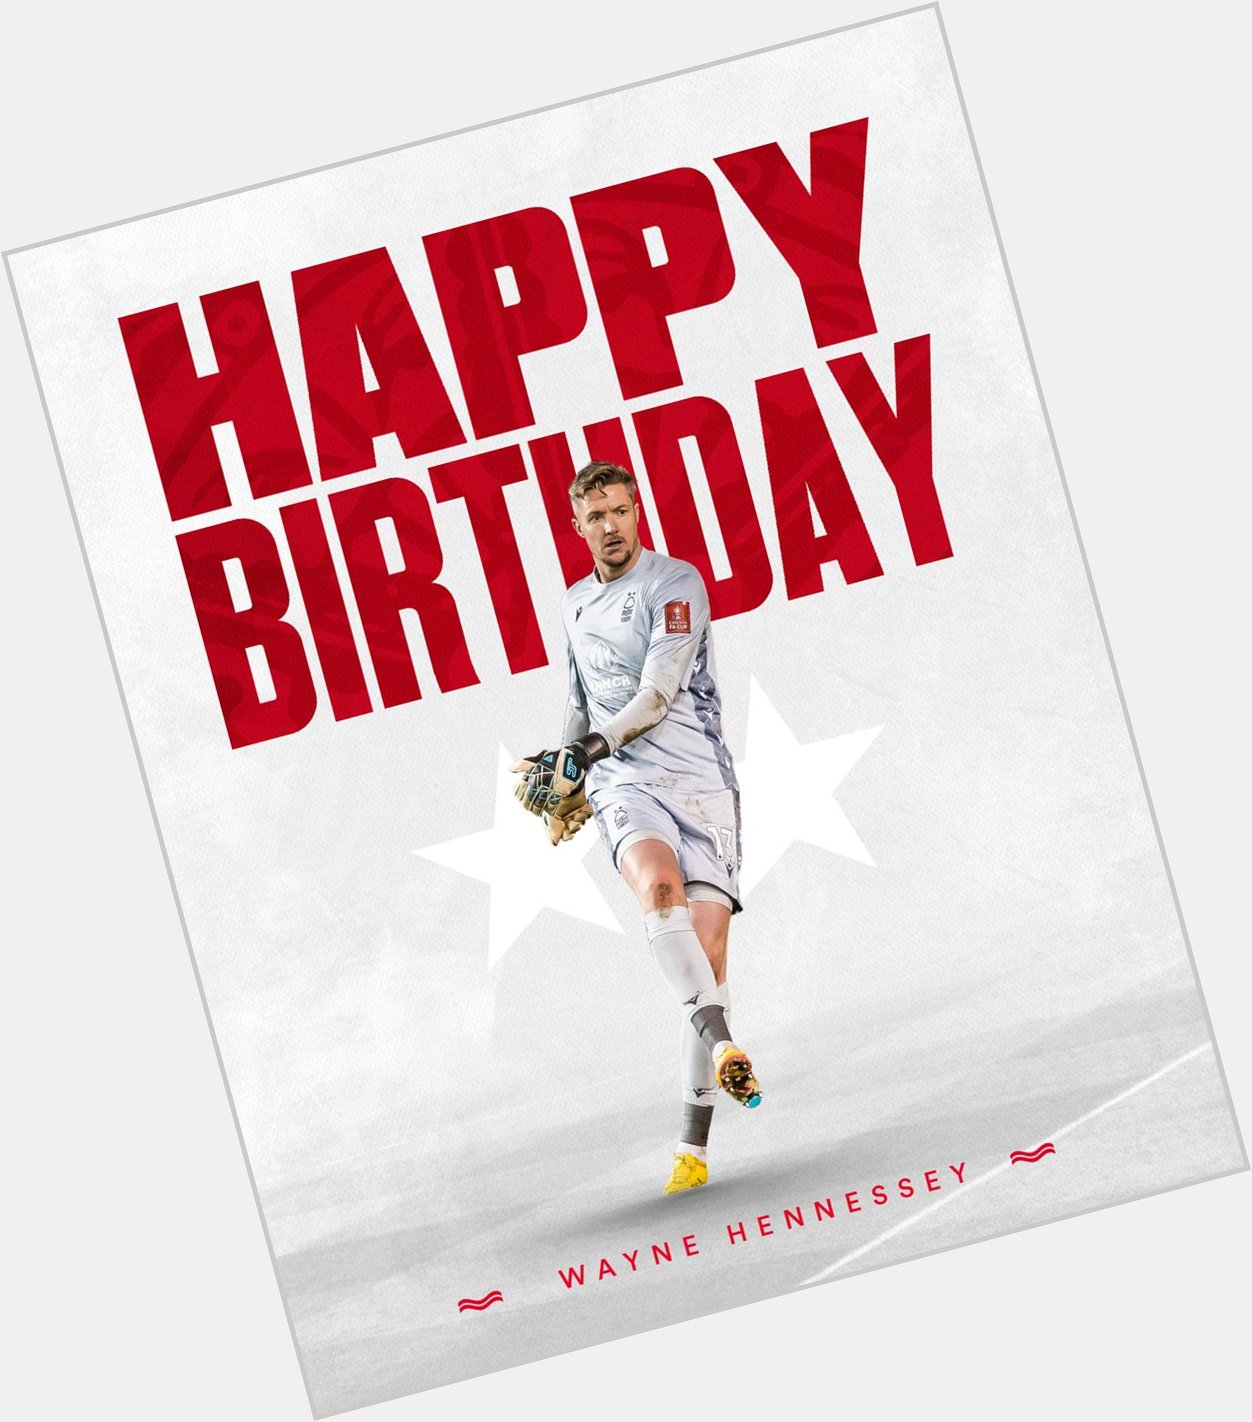 Wishing a very happy birthday to goalkeeper, Wayne Hennessey! 